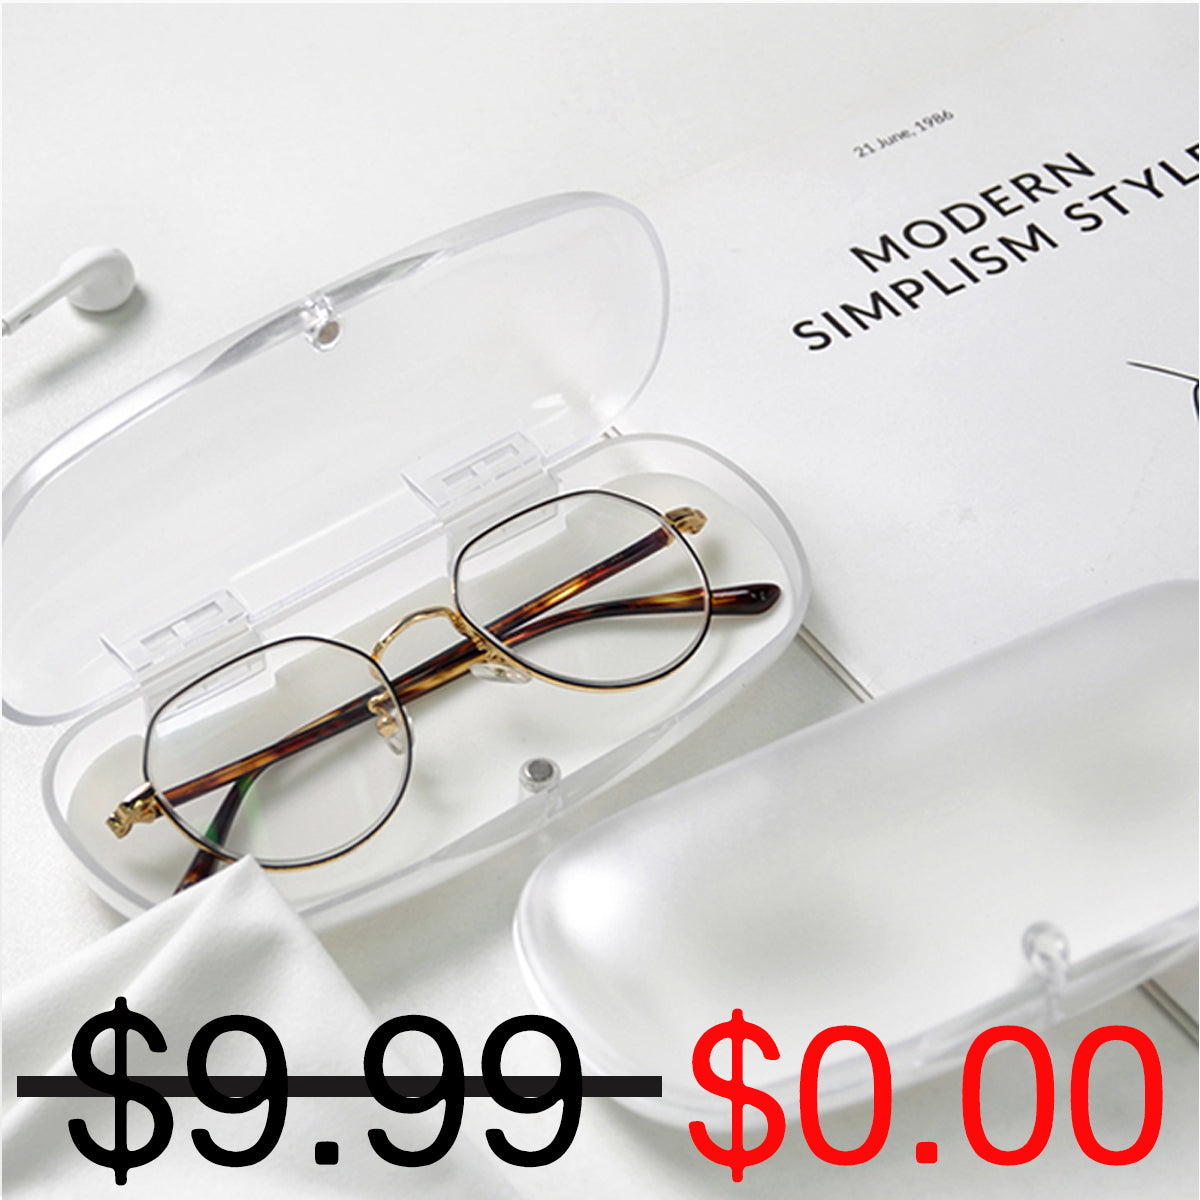 Quality Glasses Case